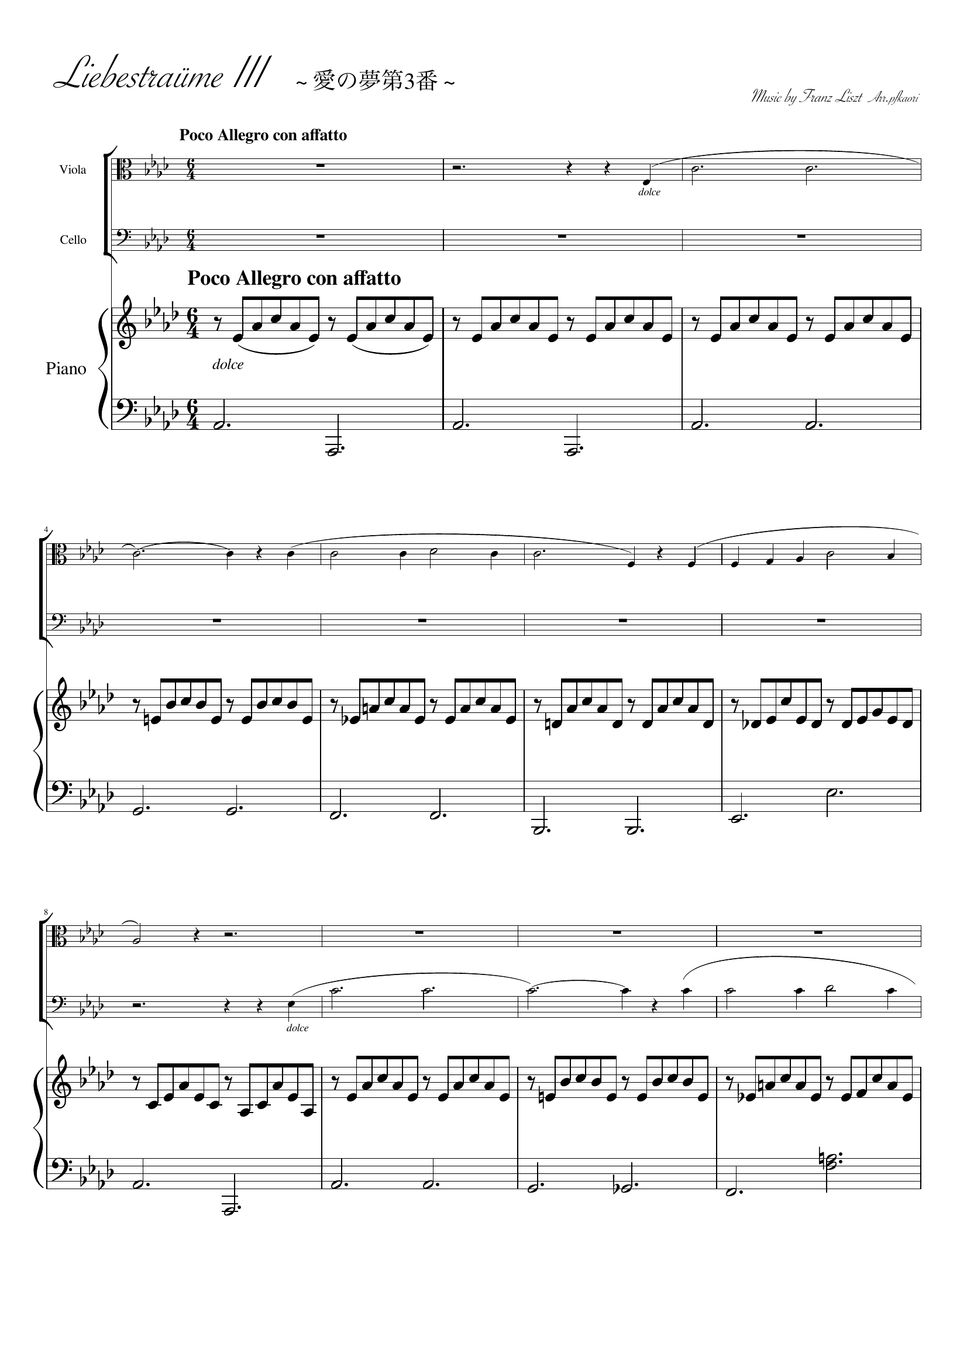 Franz Liszt - Liebestraum No. 3 (As・Piano trio / viola & cello) by pfkaori